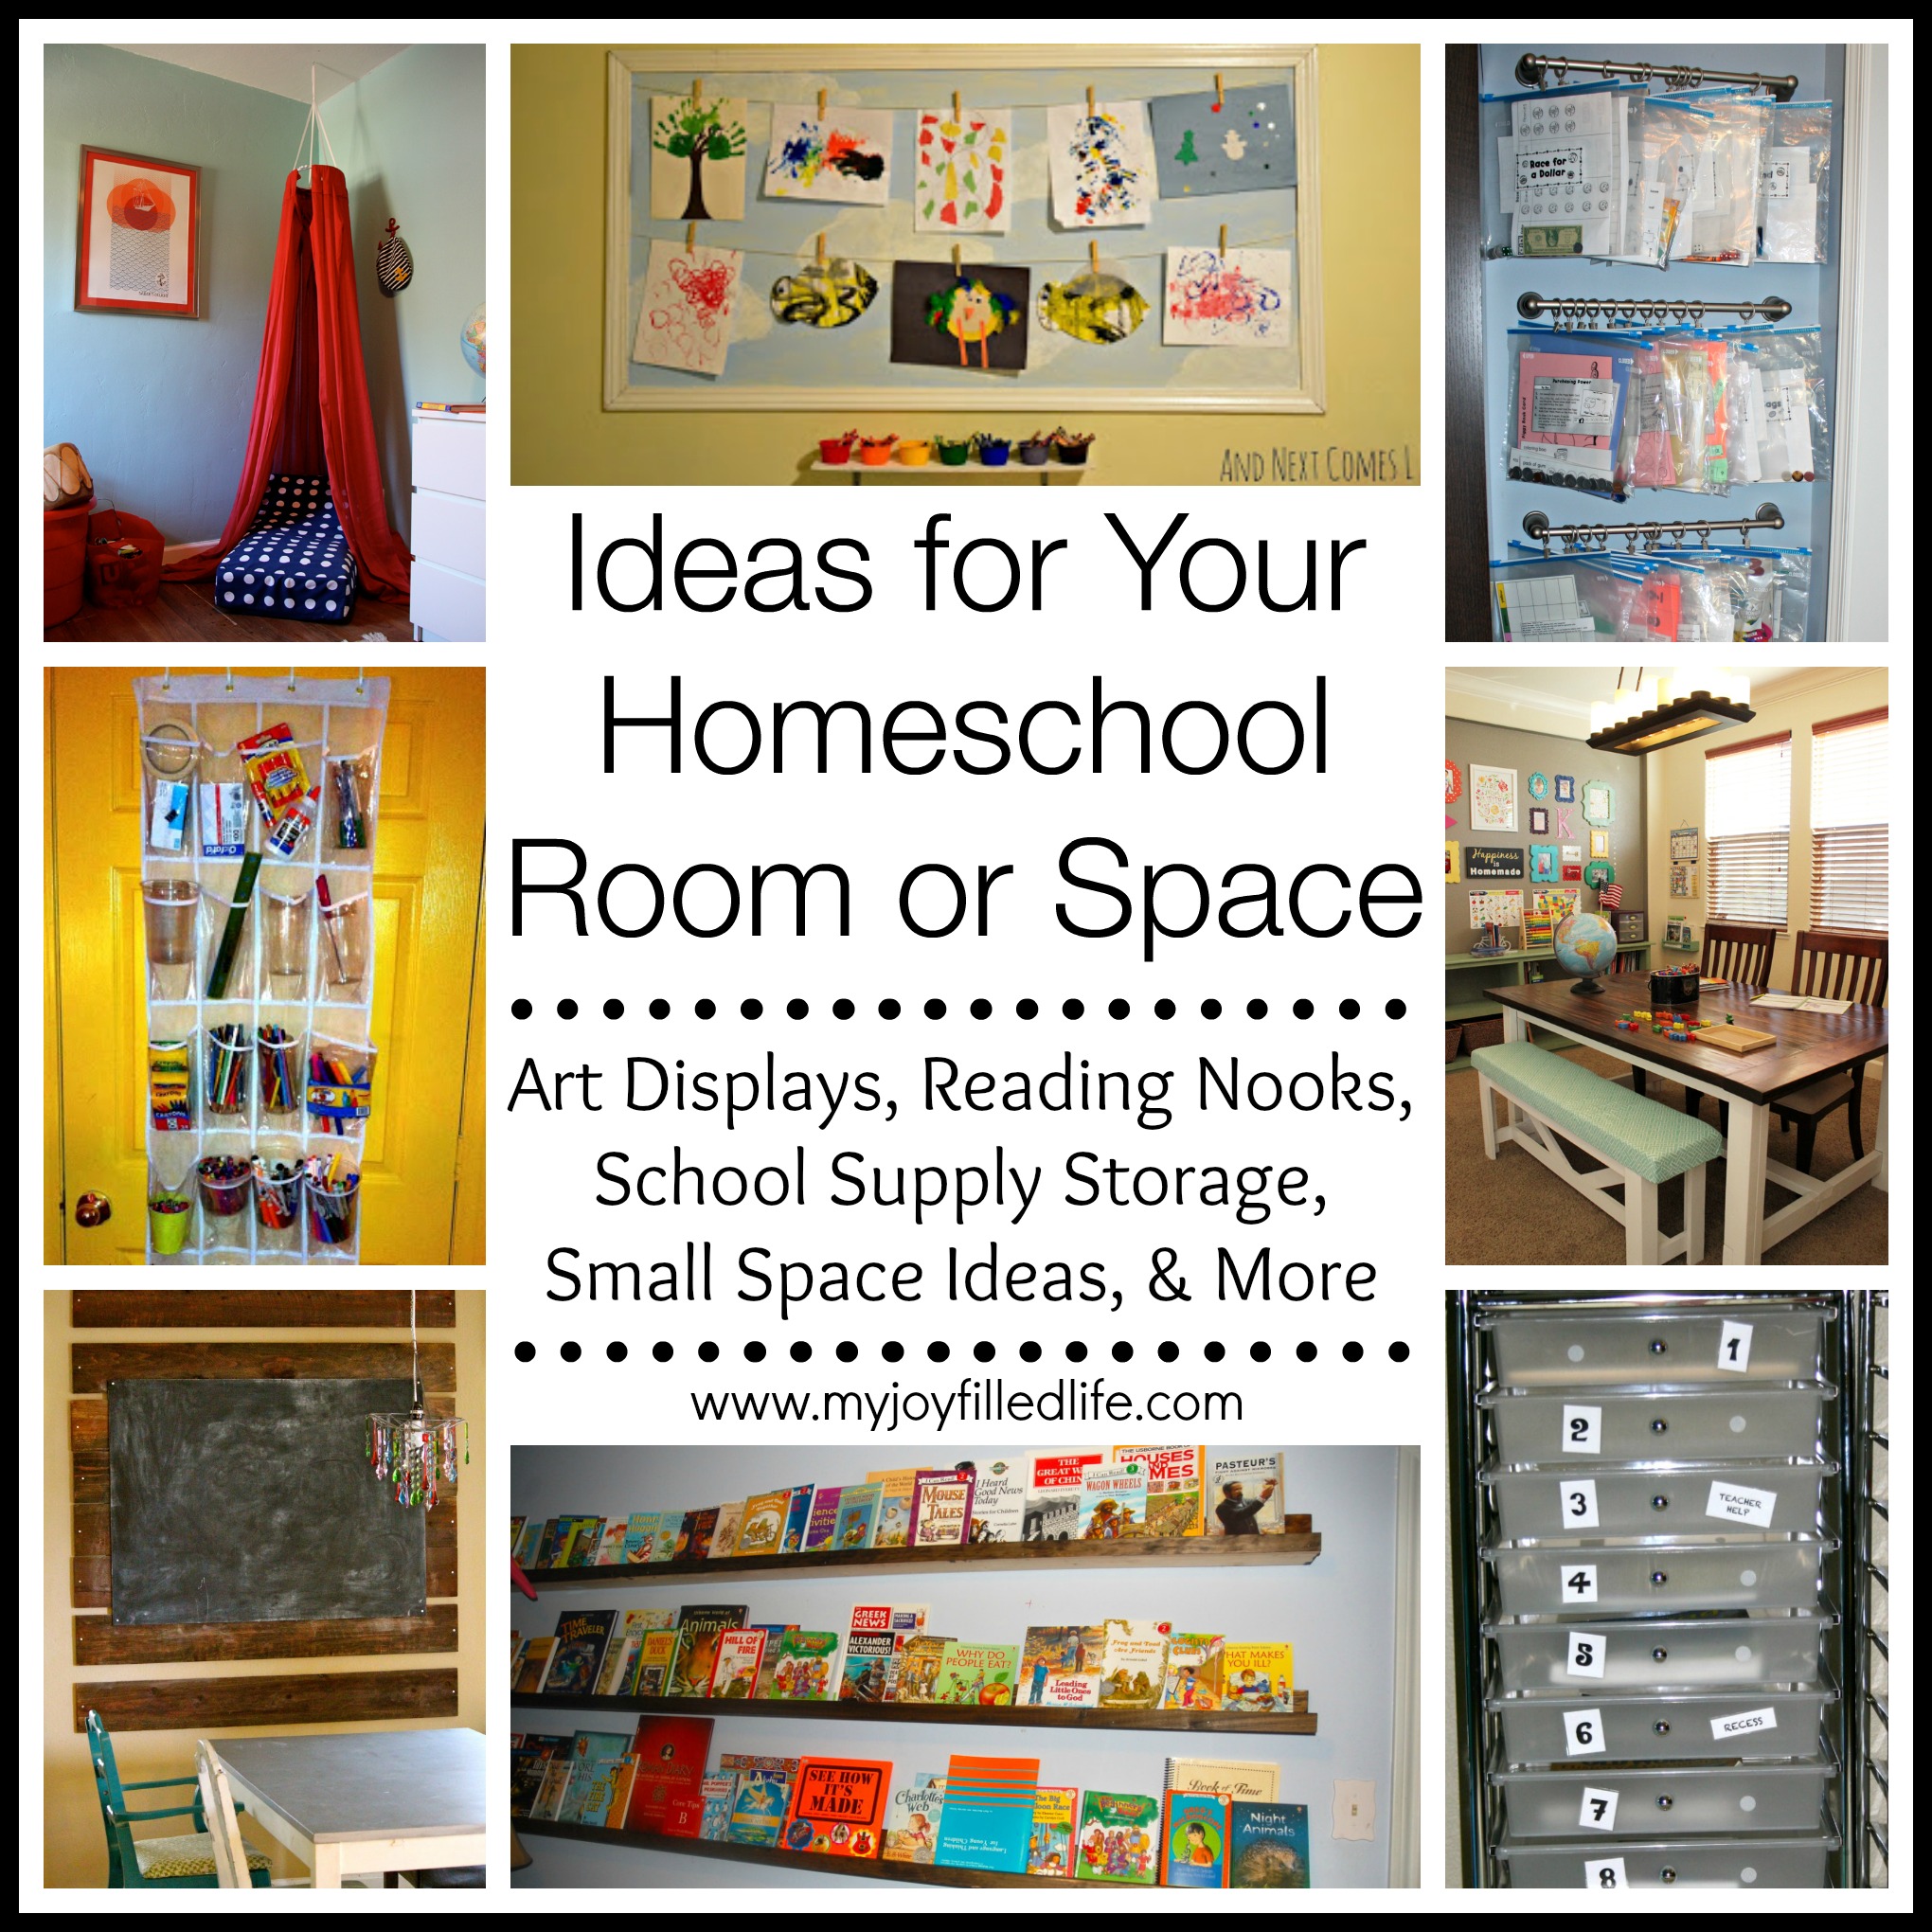 11 Incredible Homeschool Art Project Ideas - Happy Homeschool Nest